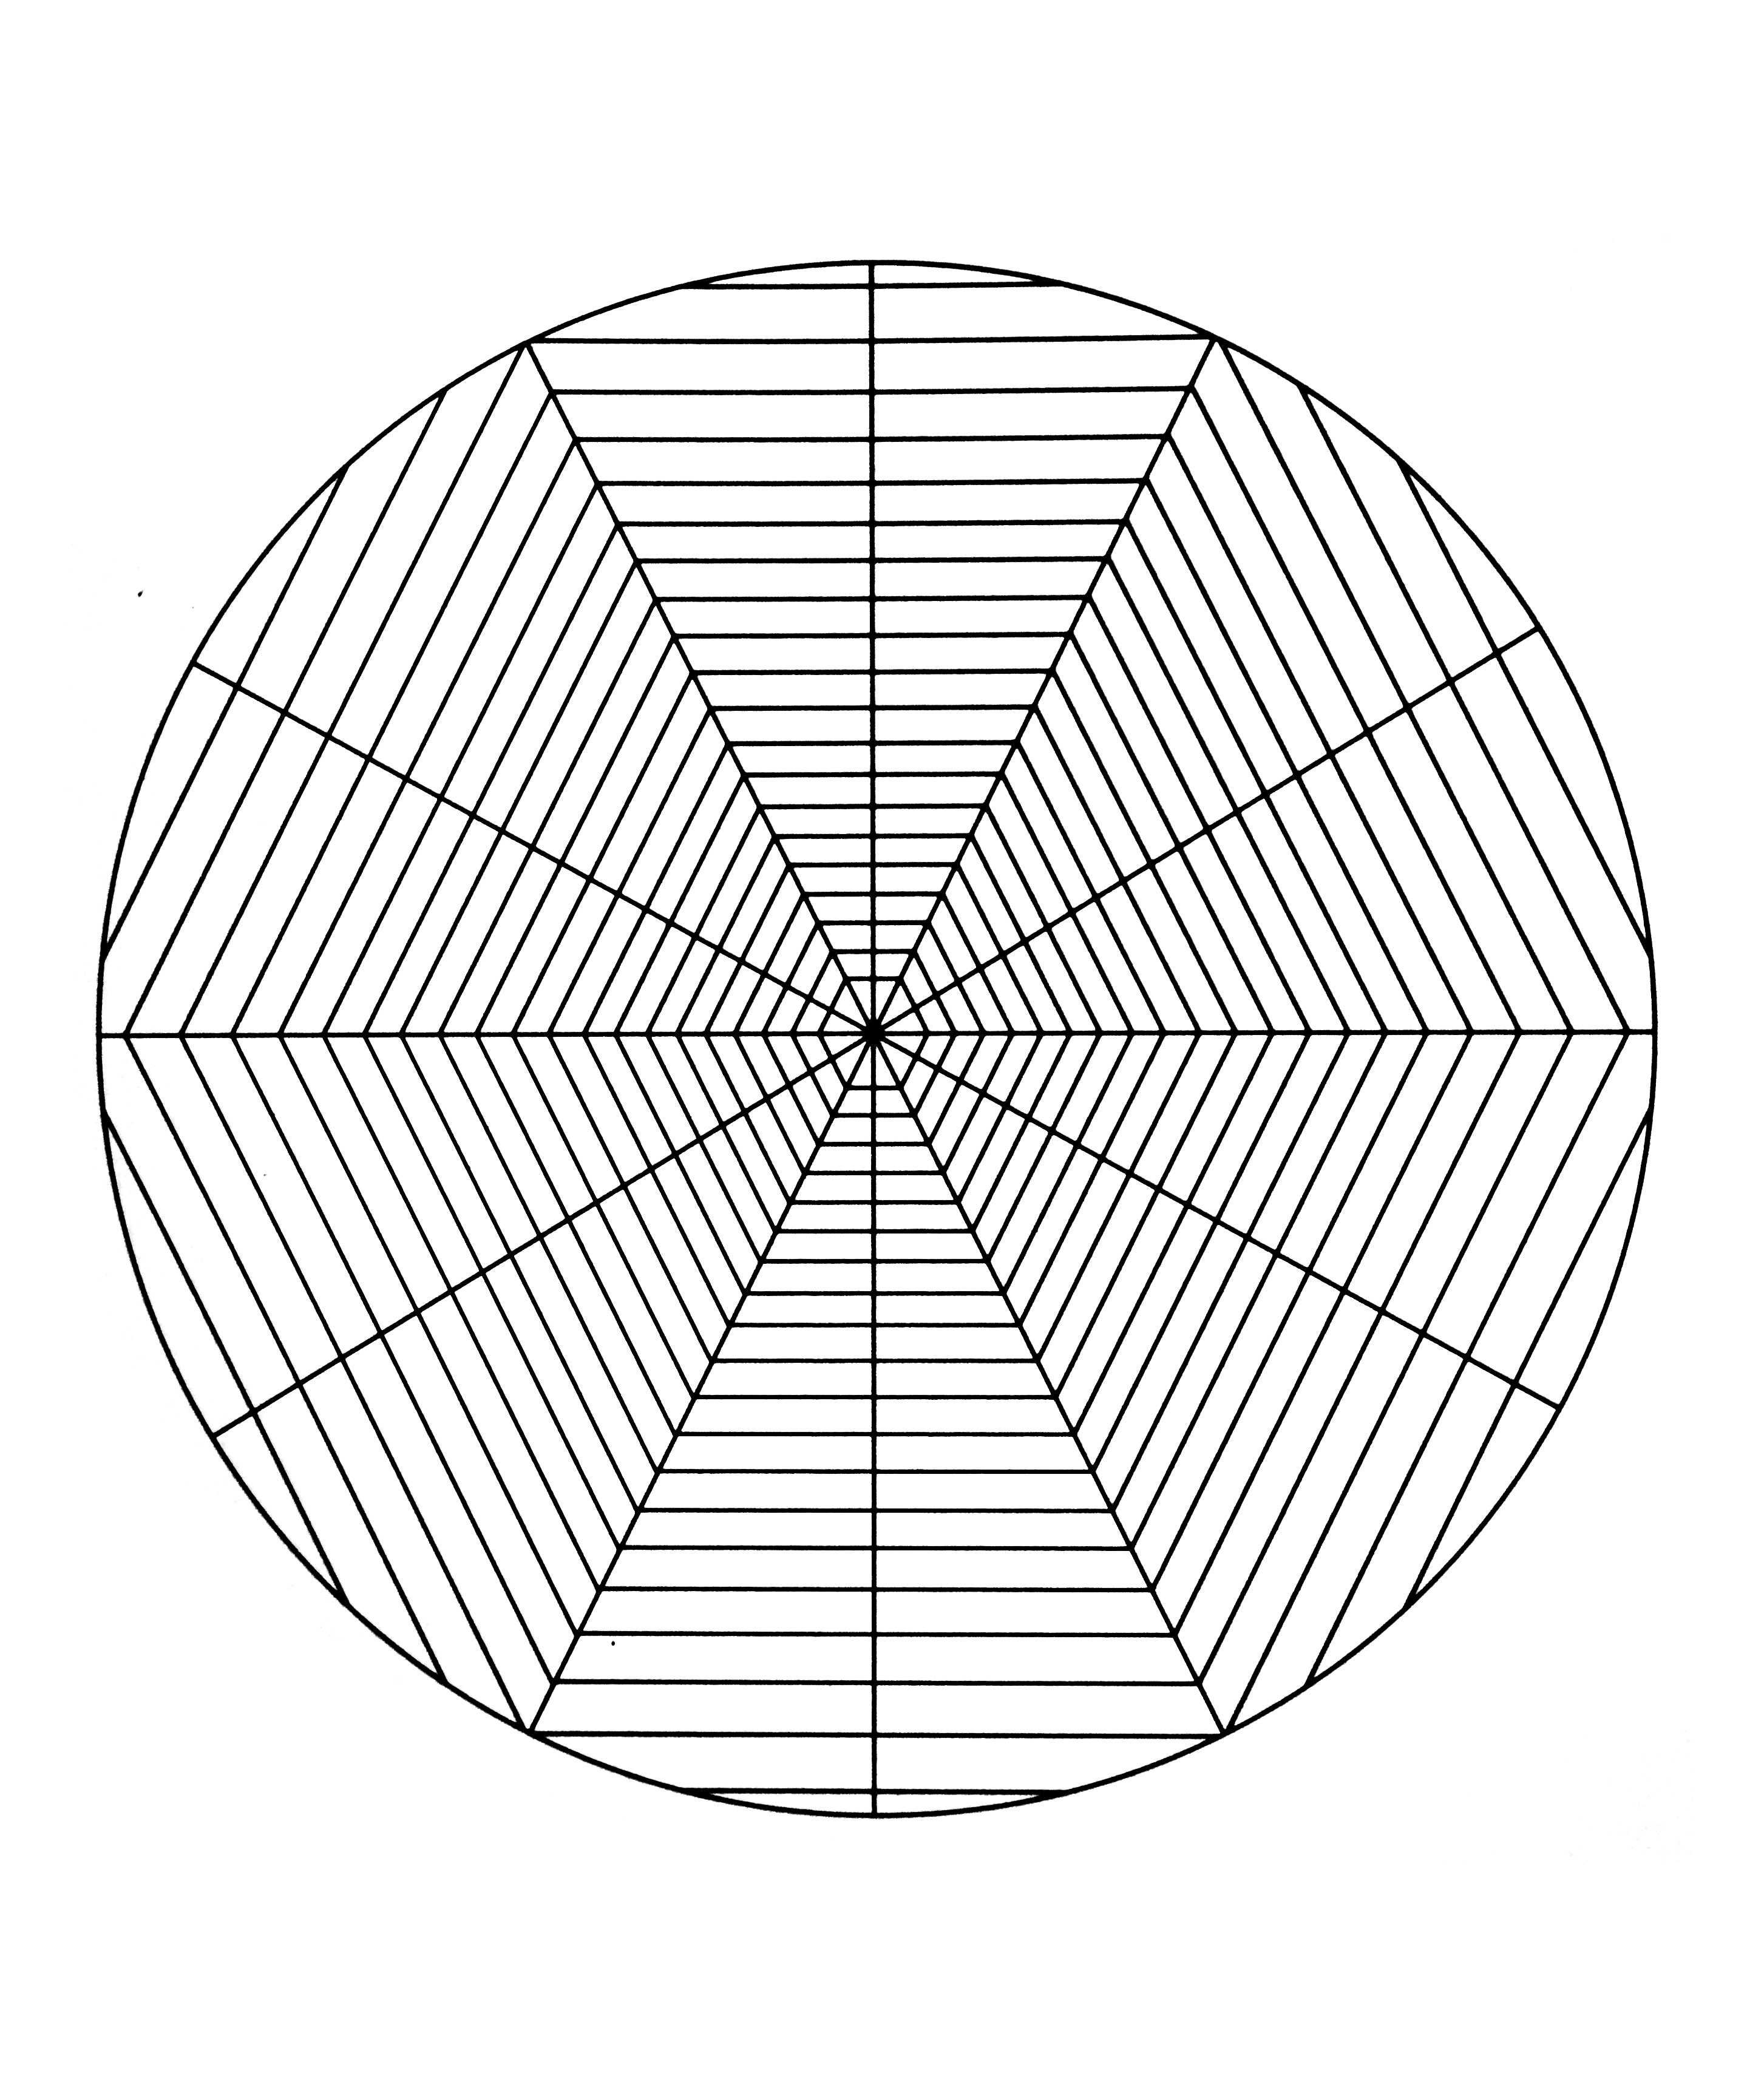 Mandala com padrões geométricos - 14